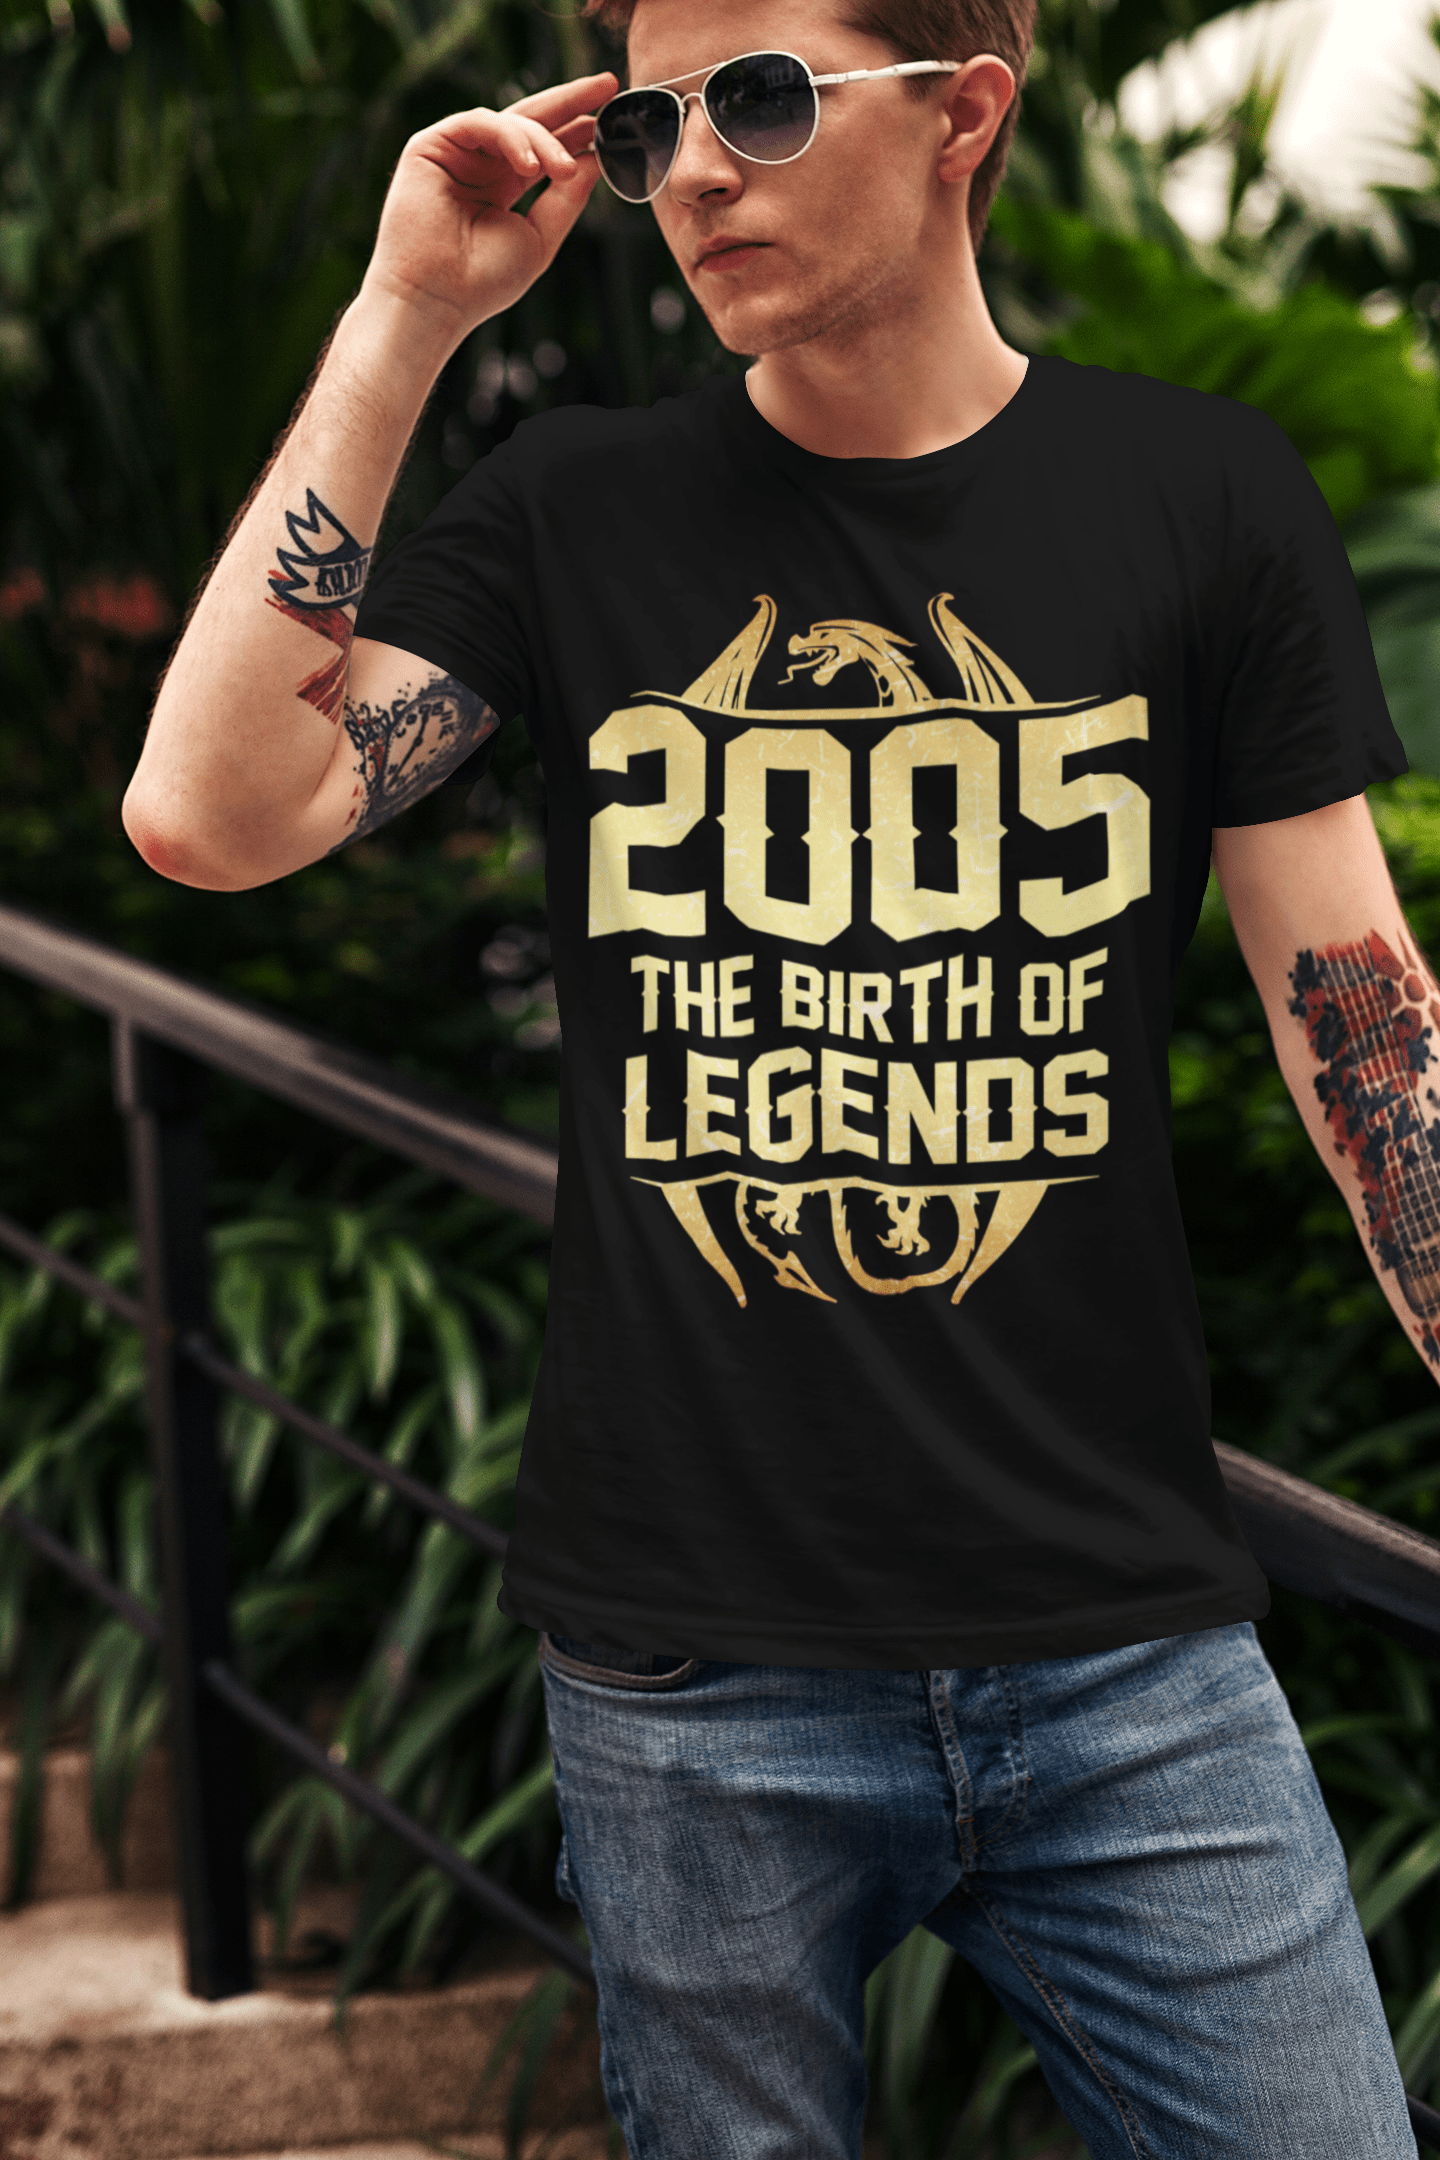 ULTRABASIC Men's T-Shirt Vintage 2005 the Birth of Legends - 15th Birthday Gift Tee Shirt